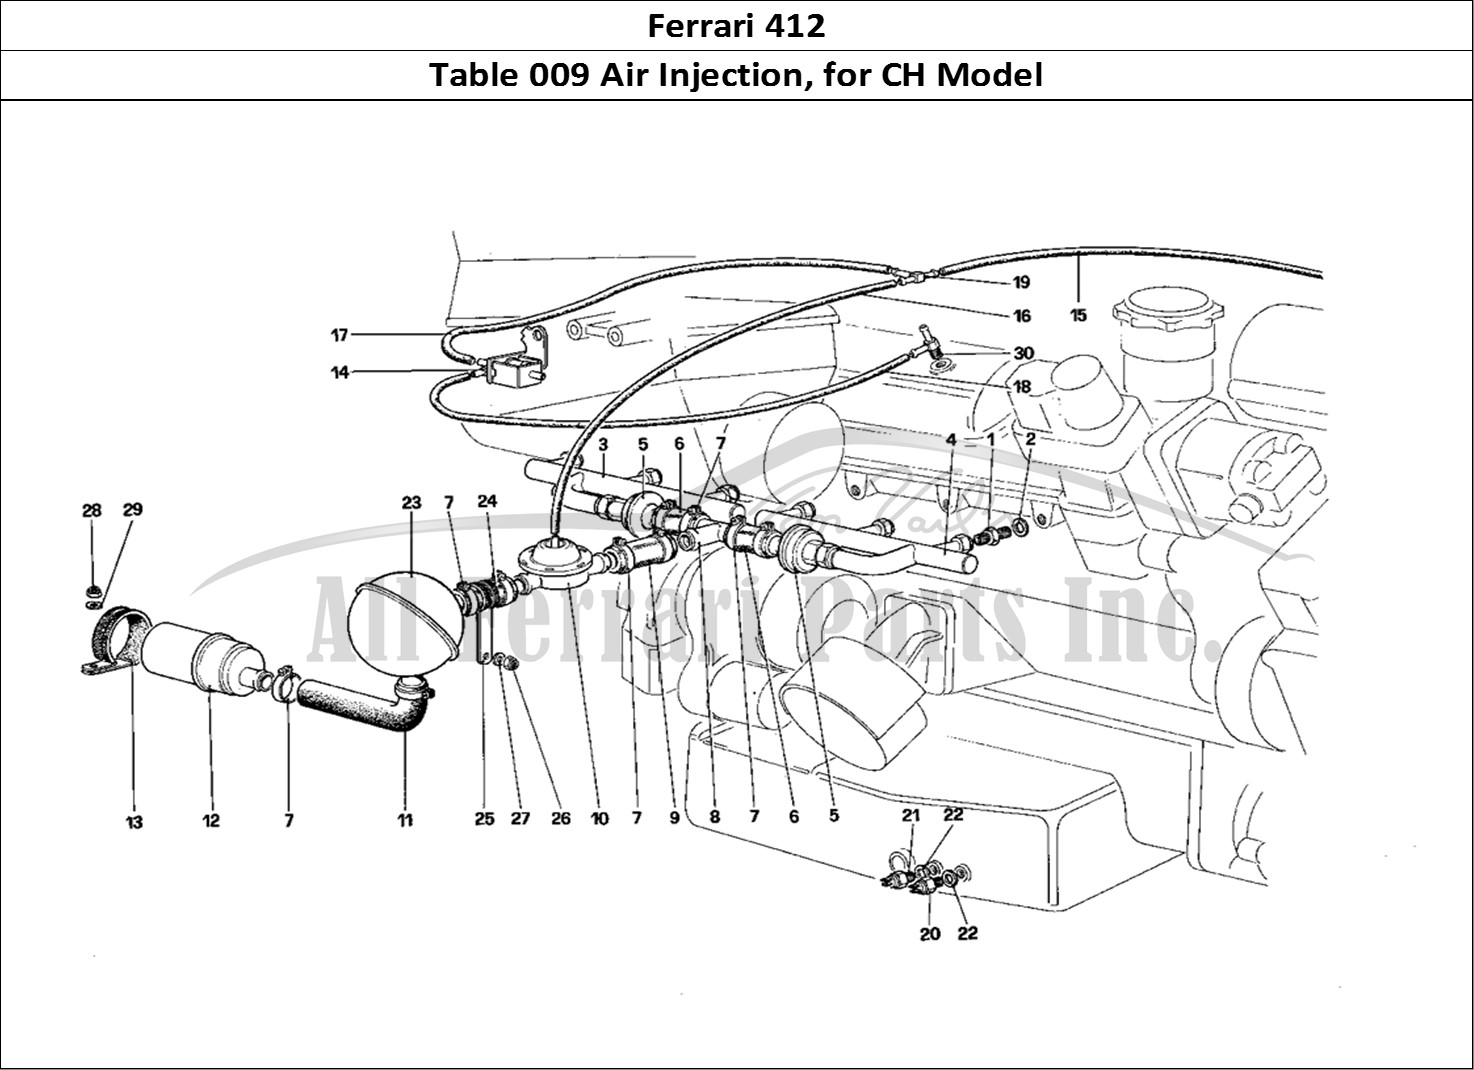 Ferrari Parts Ferrari 412 (Mechanical) Page 009 Air Injection - for CH Ve